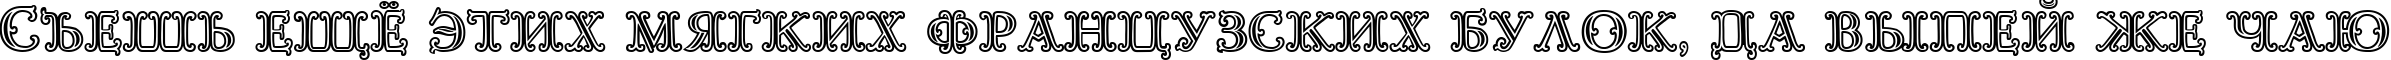 Пример написания шрифтом Goudy Decor InitialC текста на русском